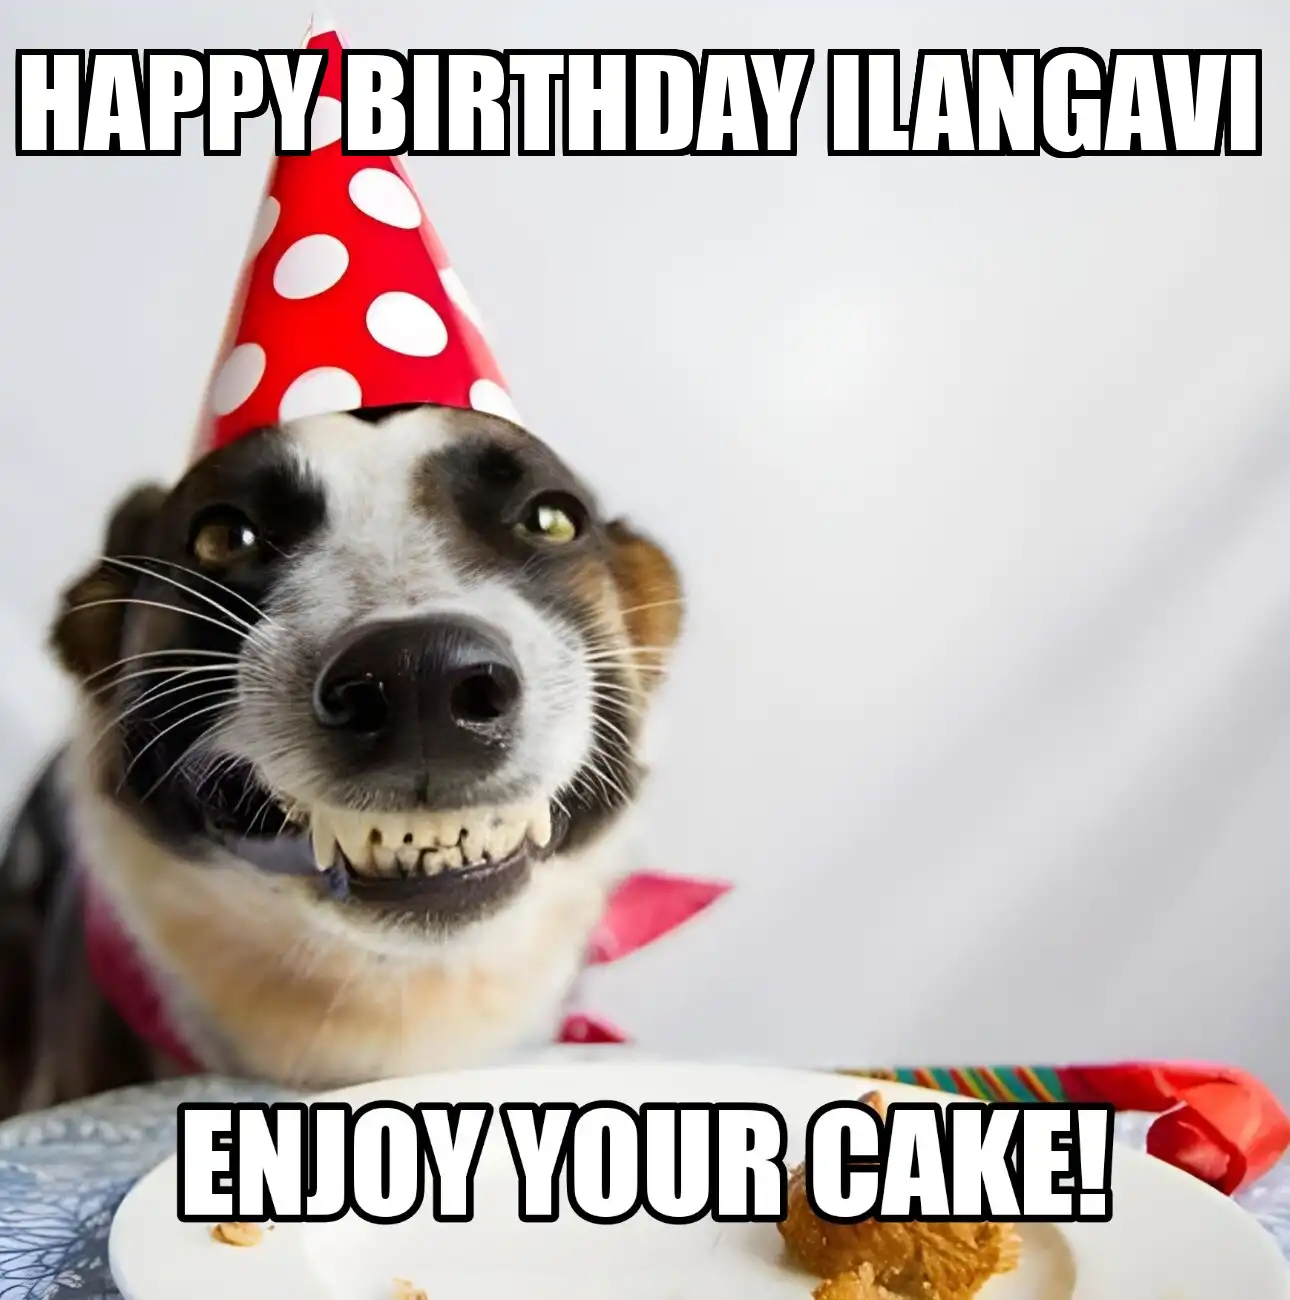 Happy Birthday Ilangavi Enjoy Your Cake Dog Meme